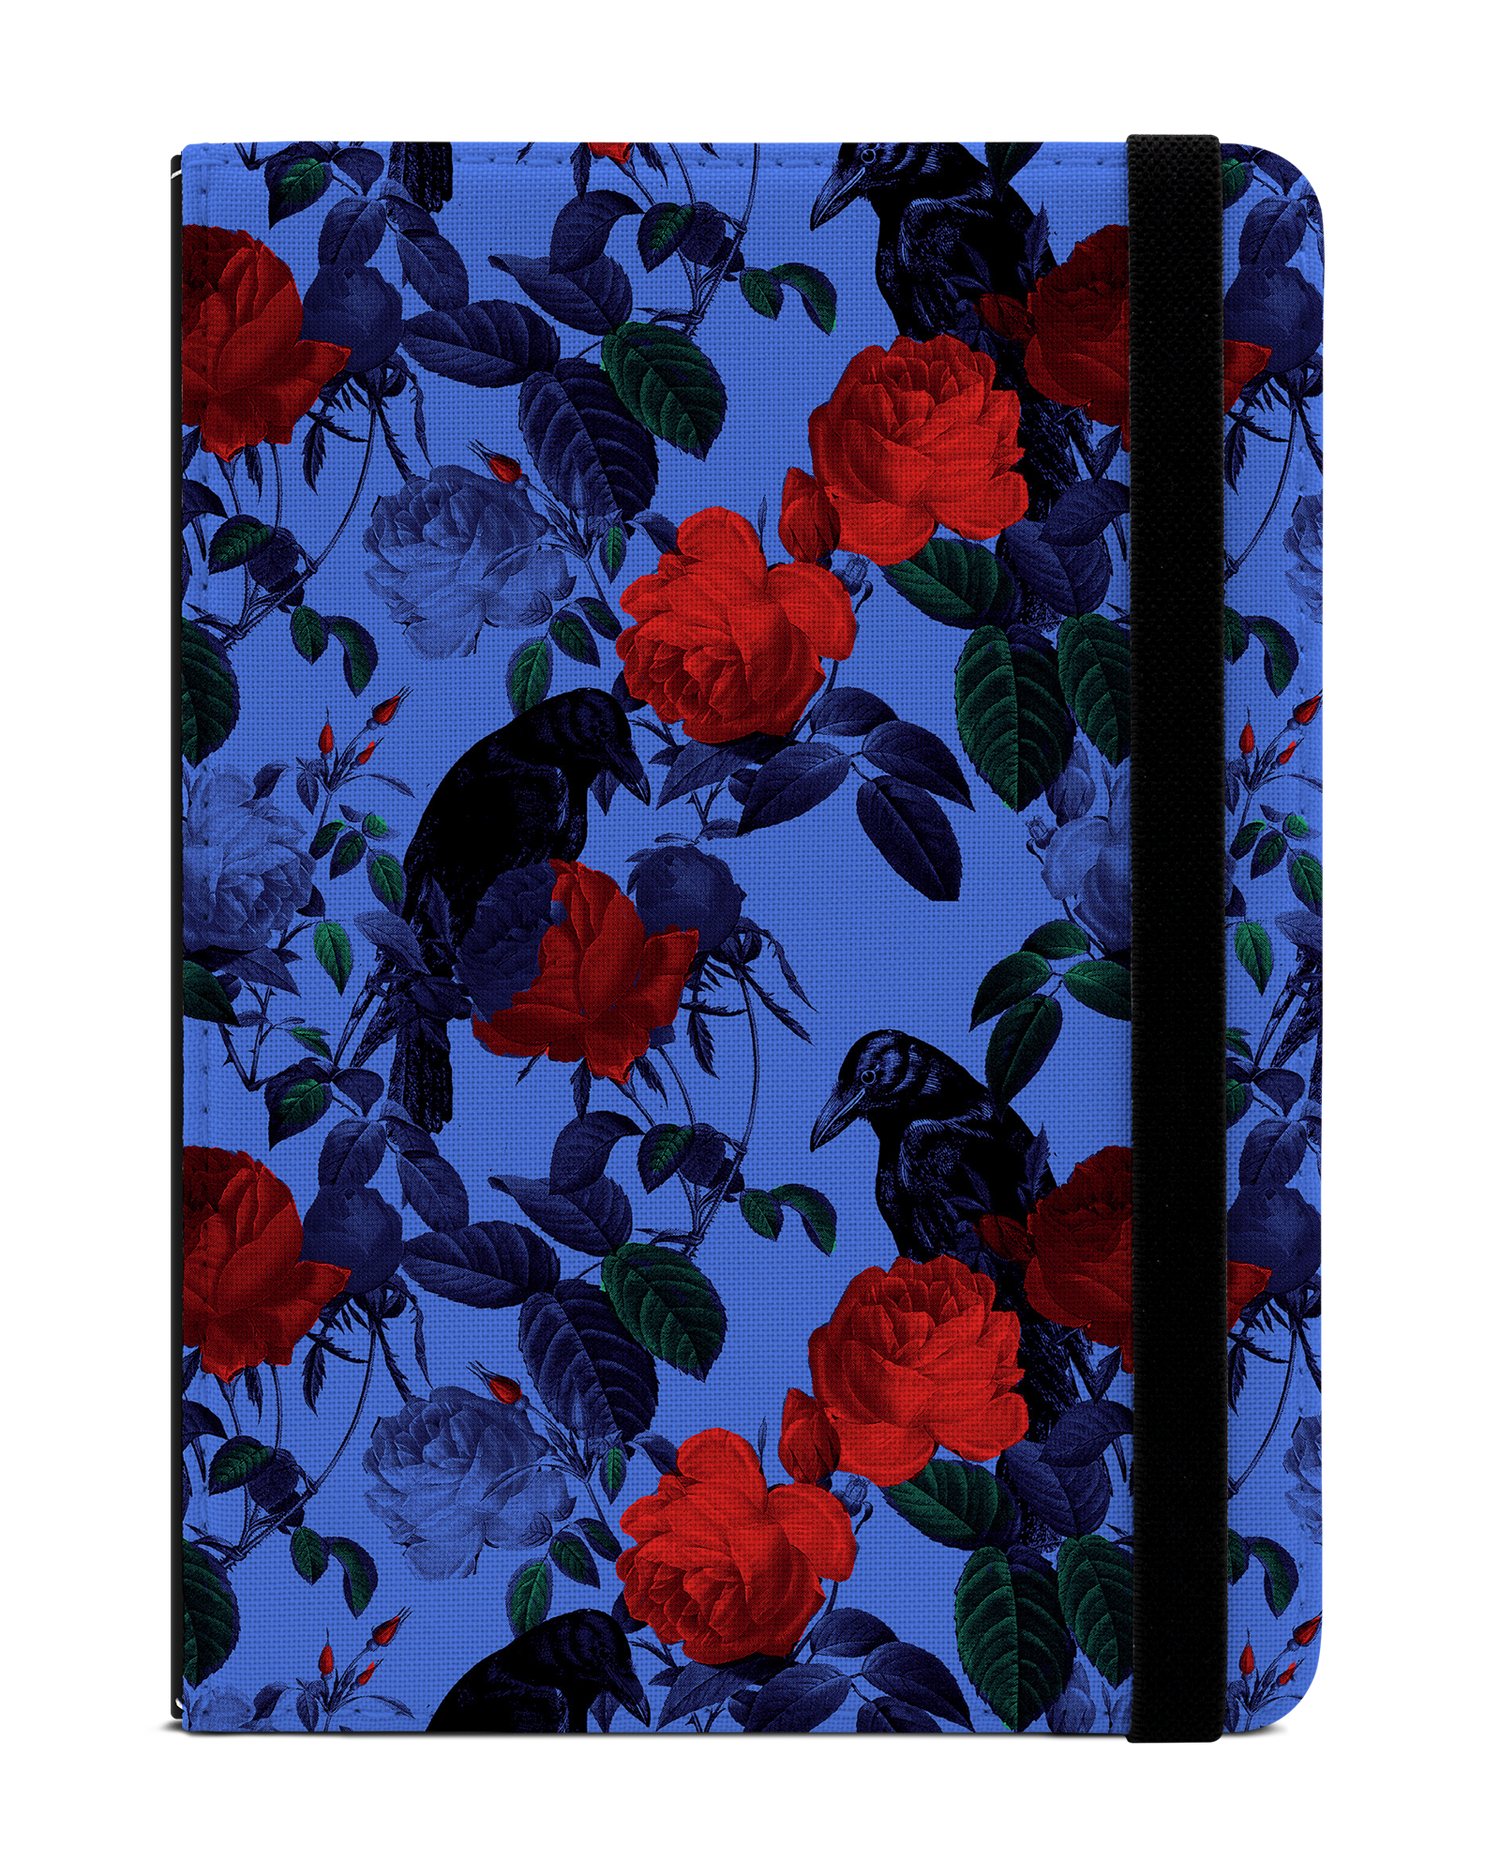 Roses And Ravens eBook Reader Hülle für tolino vision 1 bis 4 HD: Frontansicht